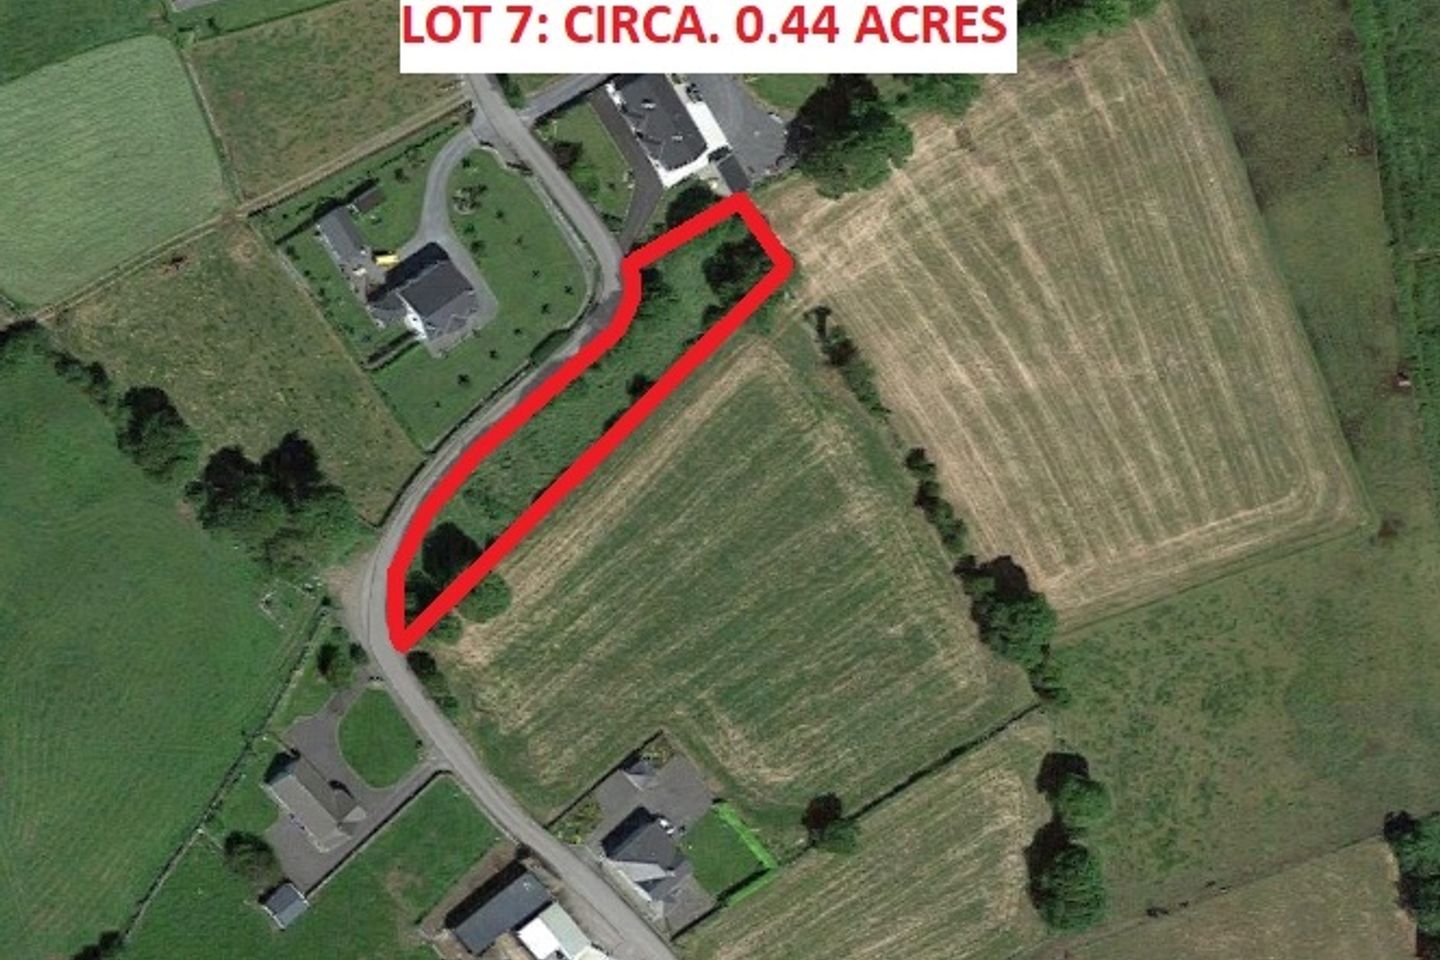 Lot 7 - circa 0.44 acres at Mace, Corrandulla, Co. Galway